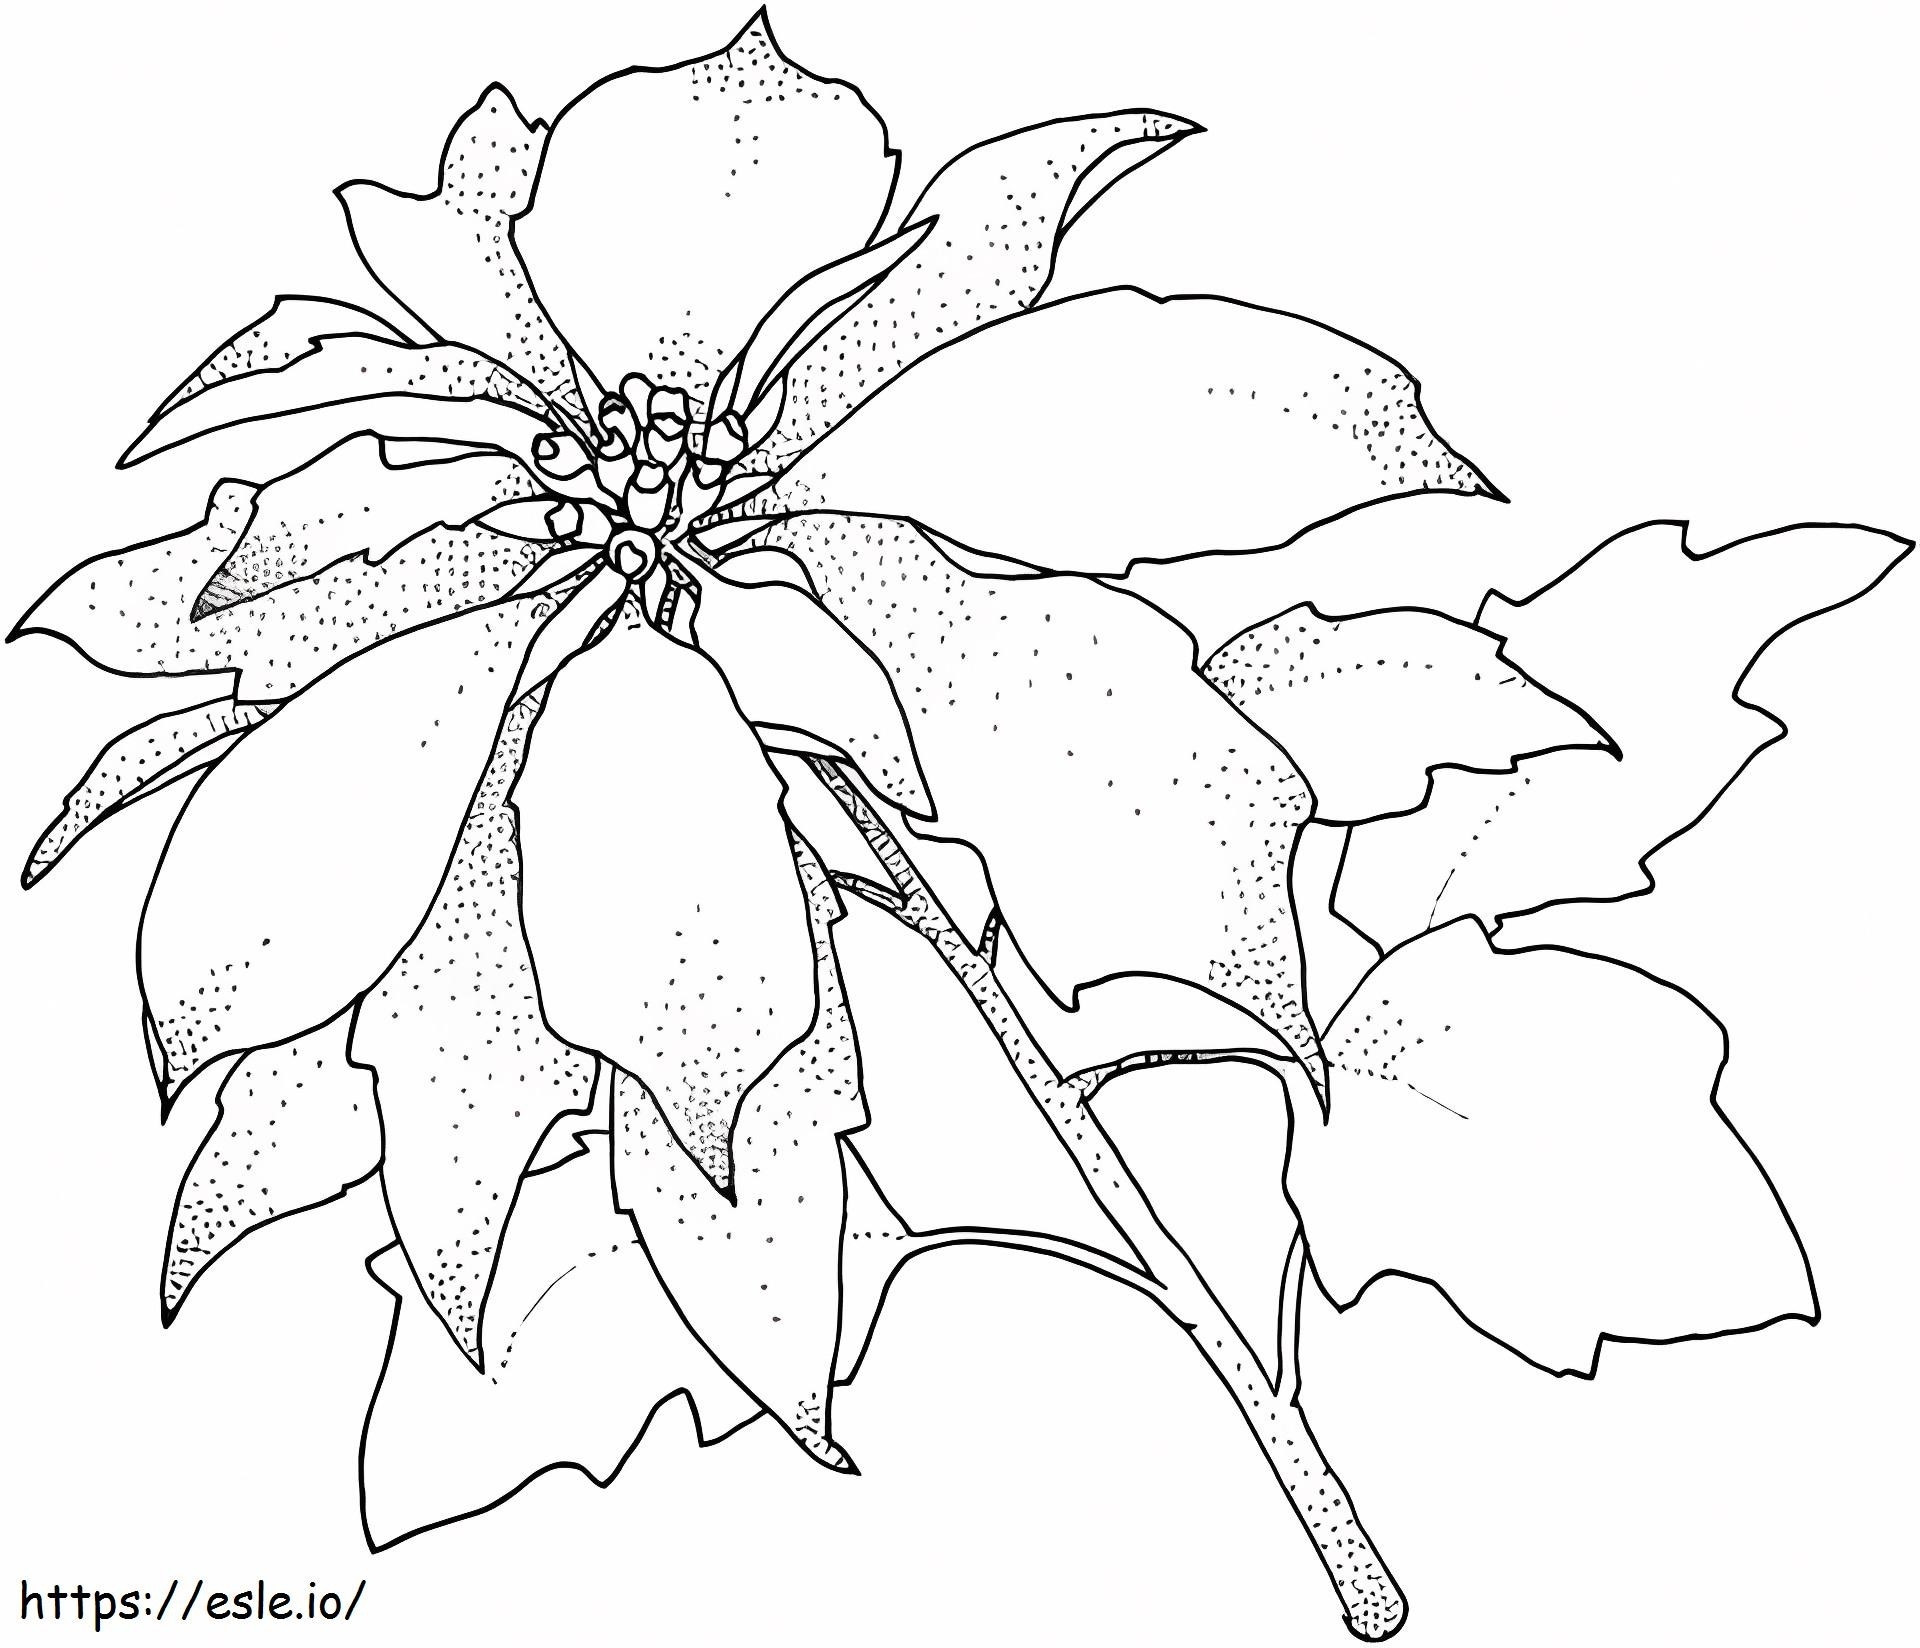 1527064192_Poinsettia karácsonyi virág kifestő